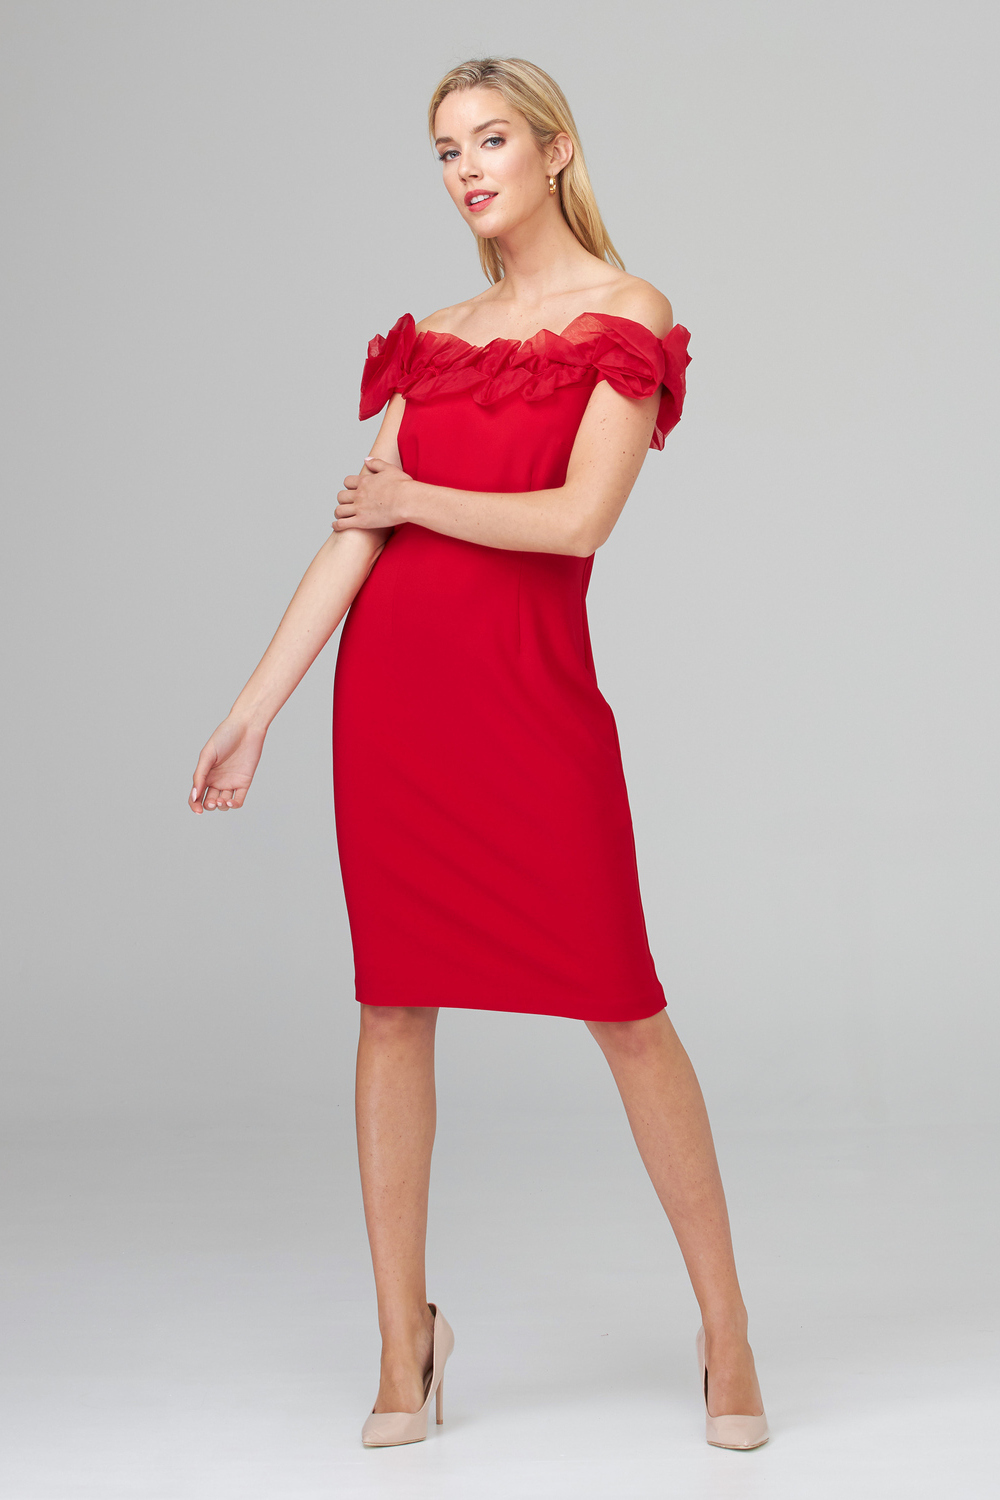 Joseph Ribkoff Dress Style 201302. Lipstick Red 173